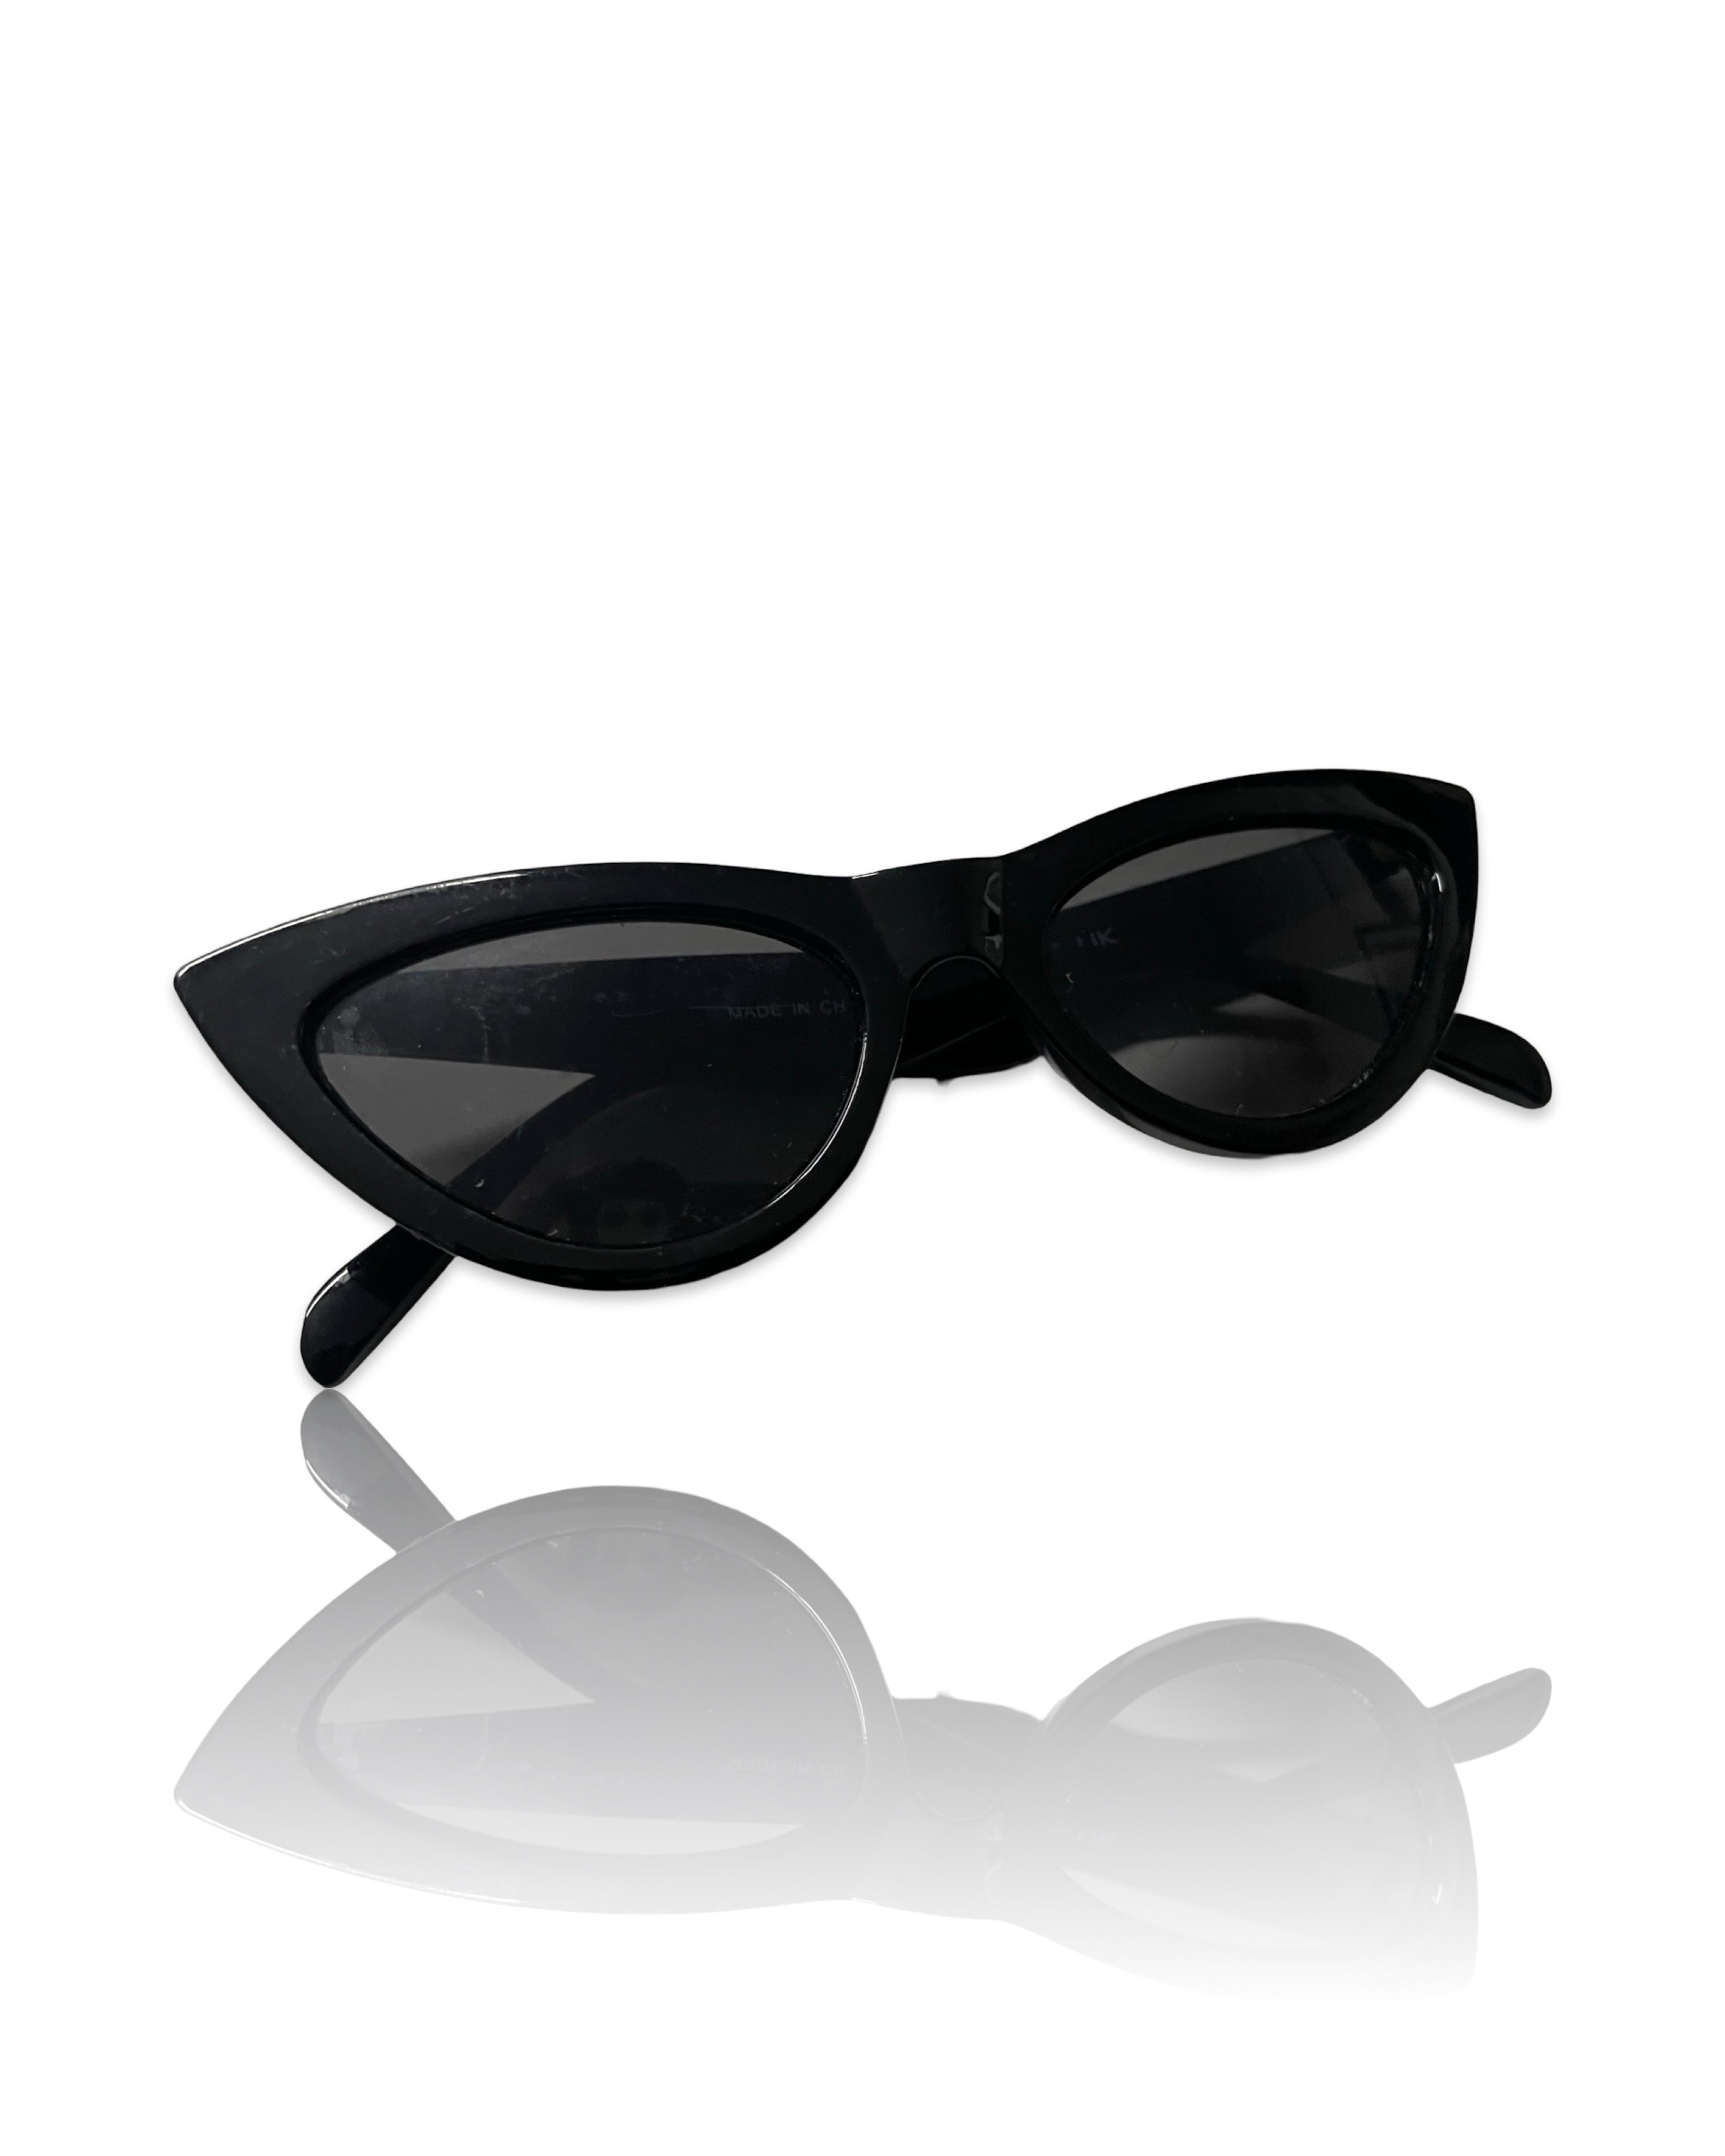 Classic Black  Cat Eye Sunglasses for Women  Sun Glasses Fashion Sunglasses